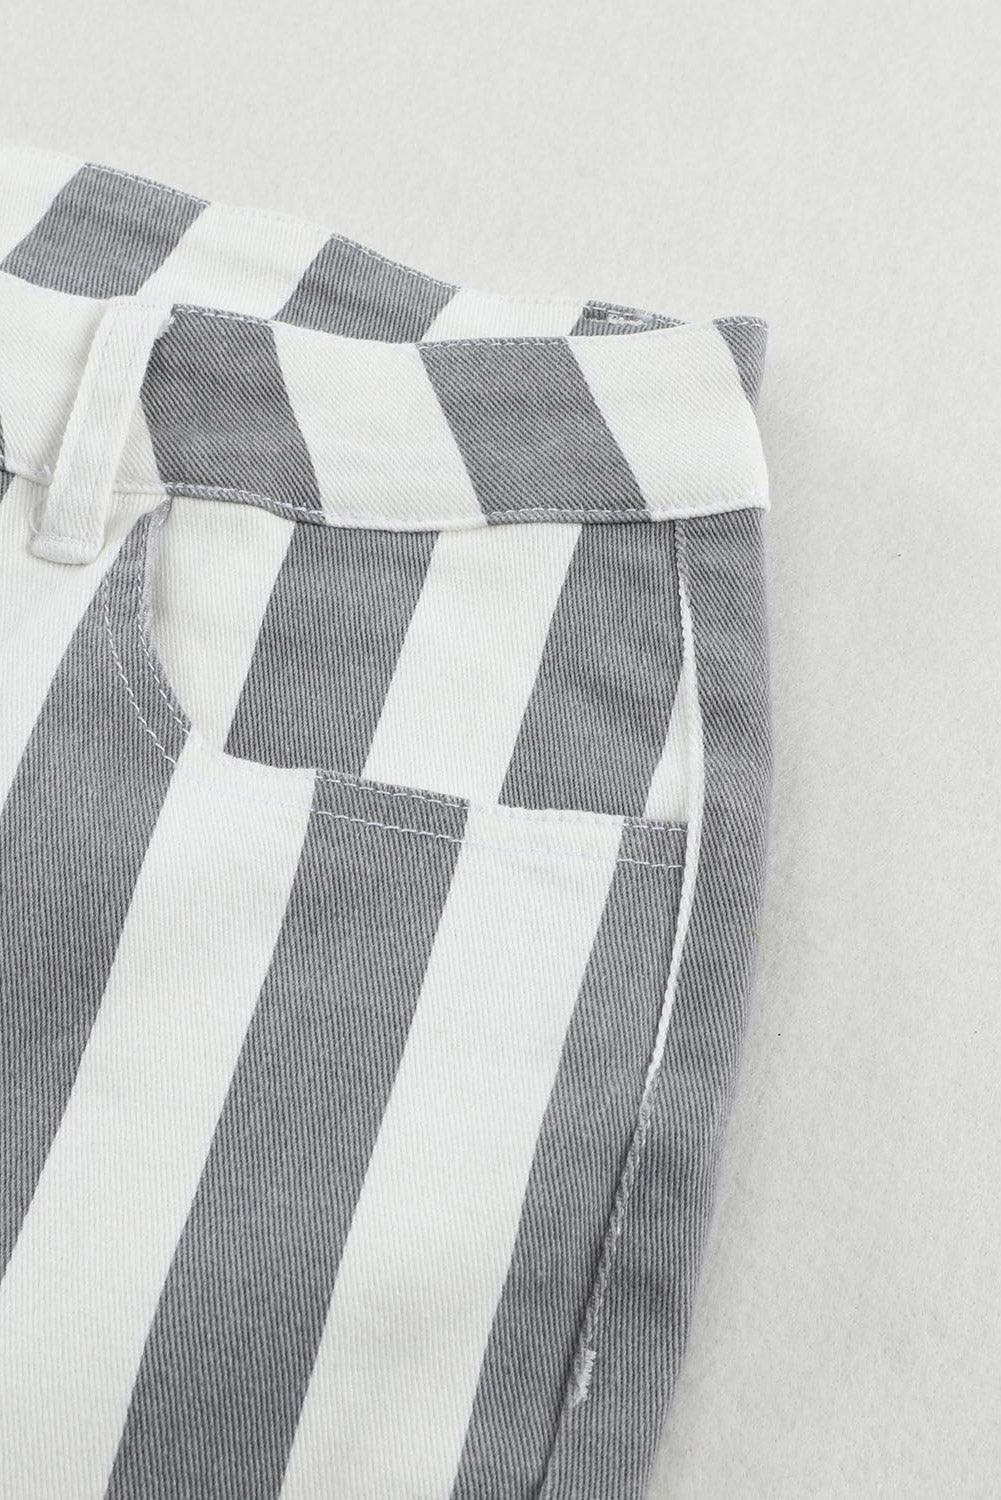 Stripe Star Embellished Western Flare Jeans - SELFTRITSS